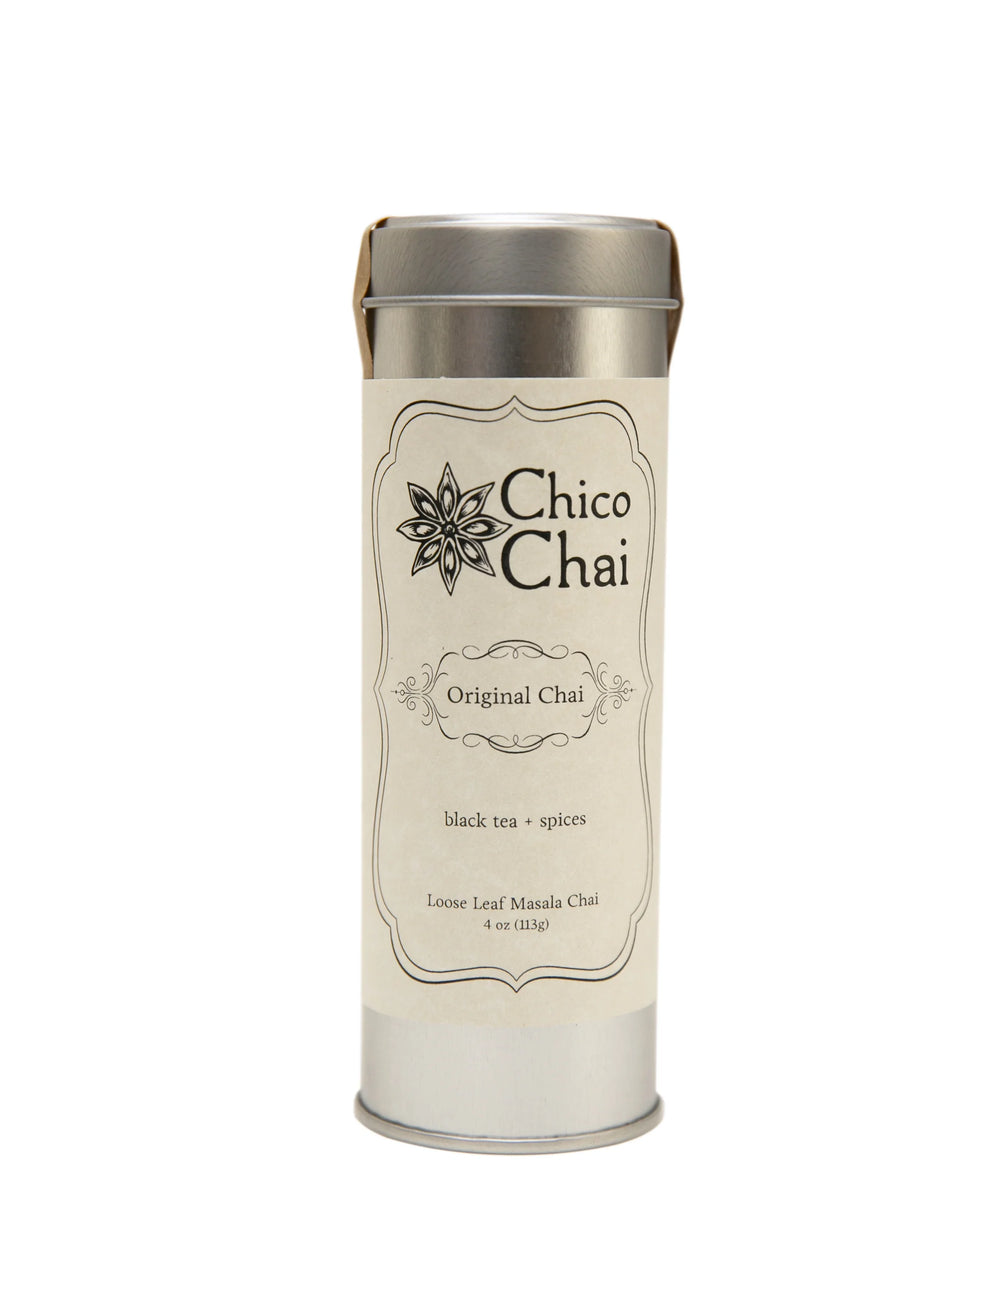 Original Chico Chai